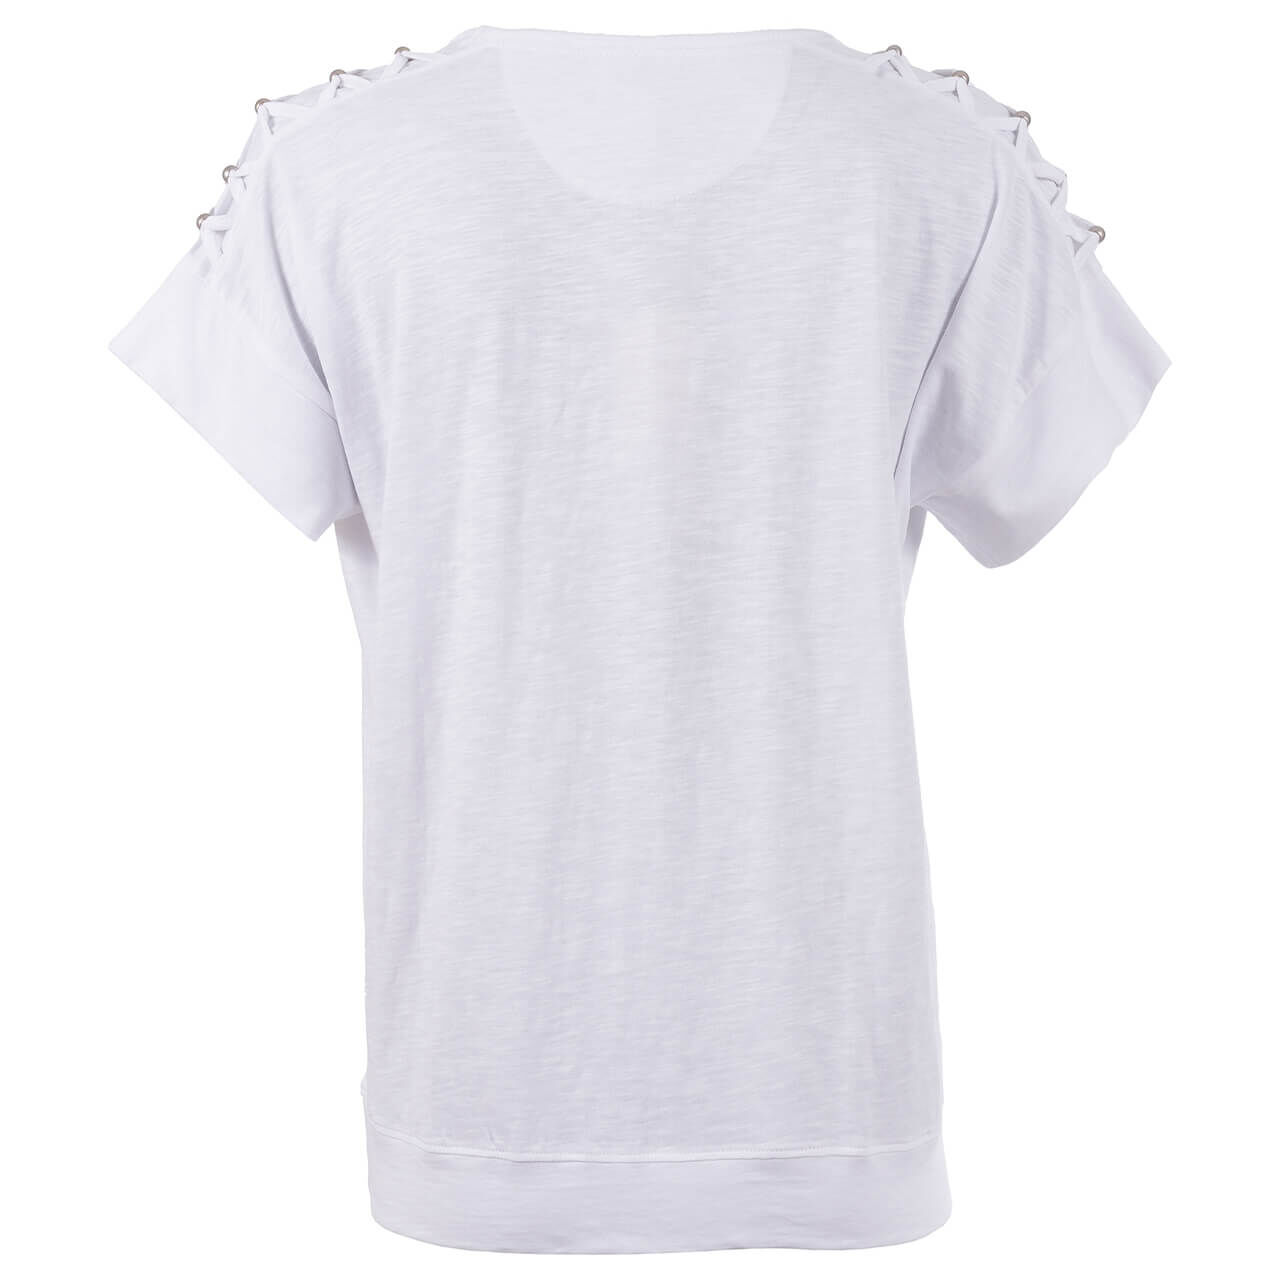 Soquesto Damen T-Shirt floral white